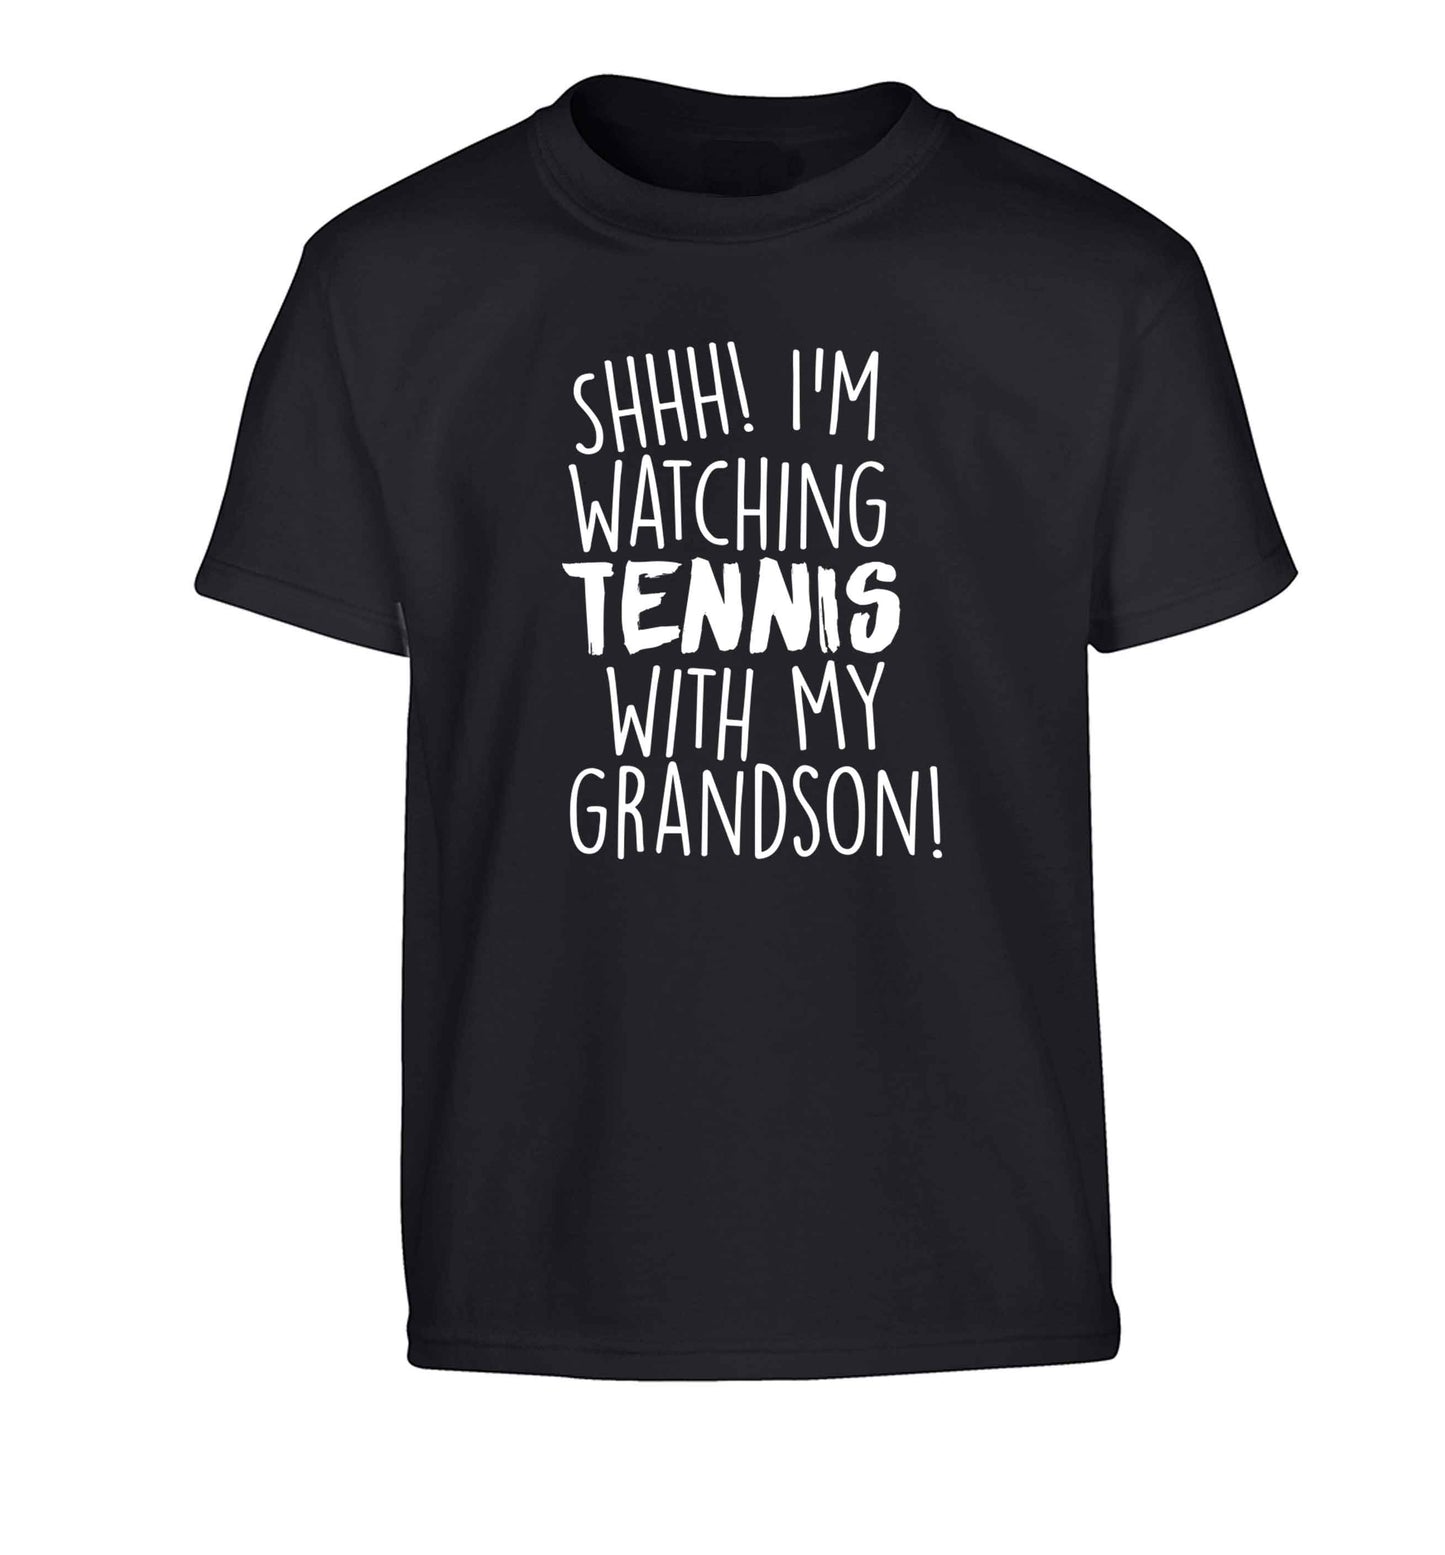 Shh! I'm watching tennis with my grandson! Children's black Tshirt 12-13 Years